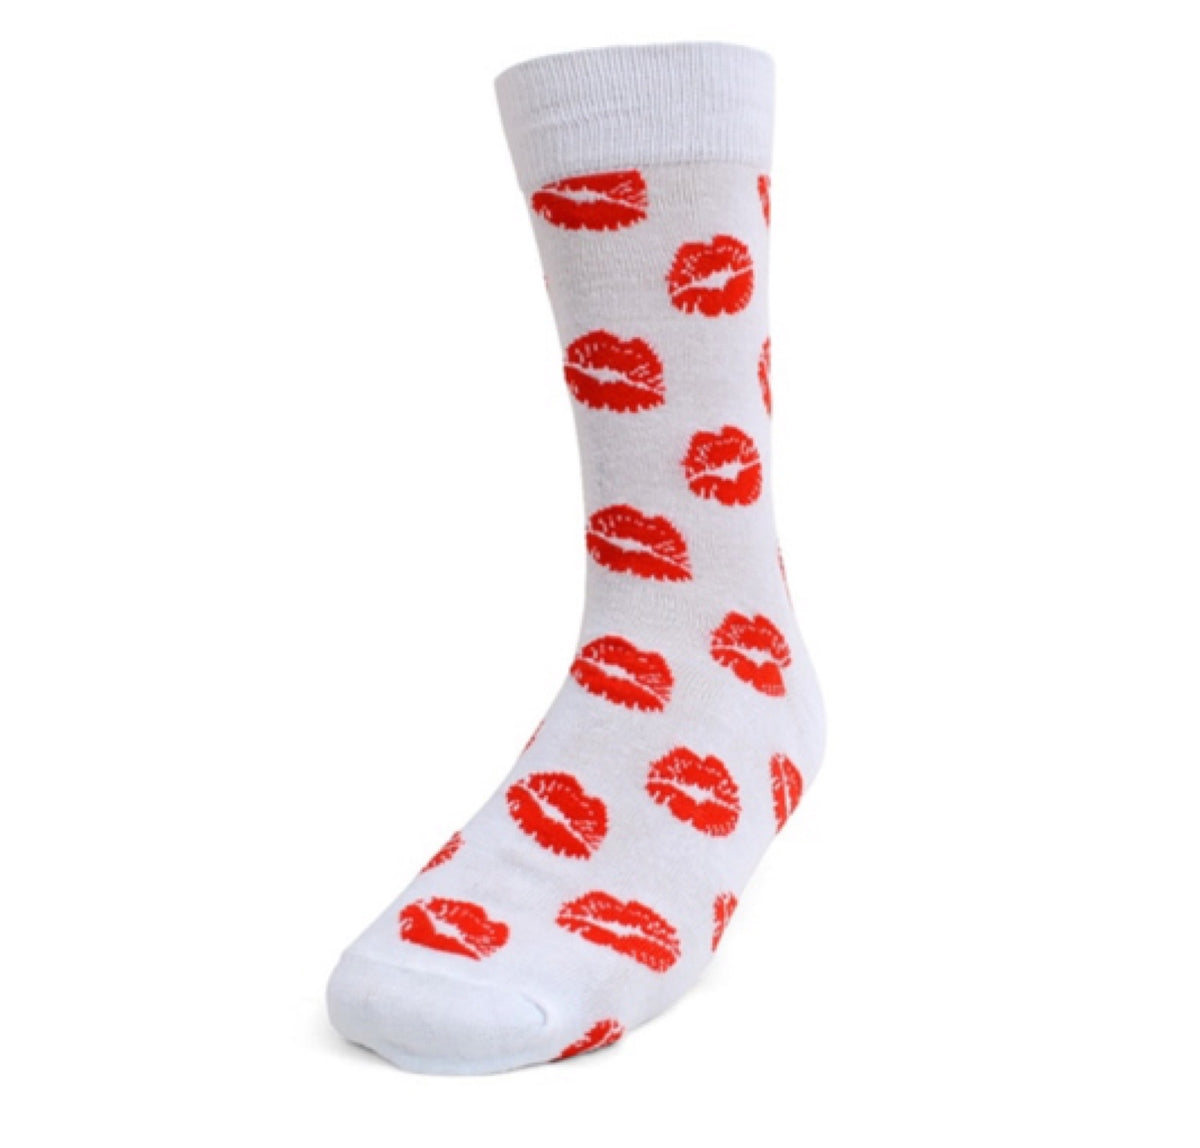 Calcetines rojos hombre Love Sandiwich Happy Sock's Color Rojo Taglia ST